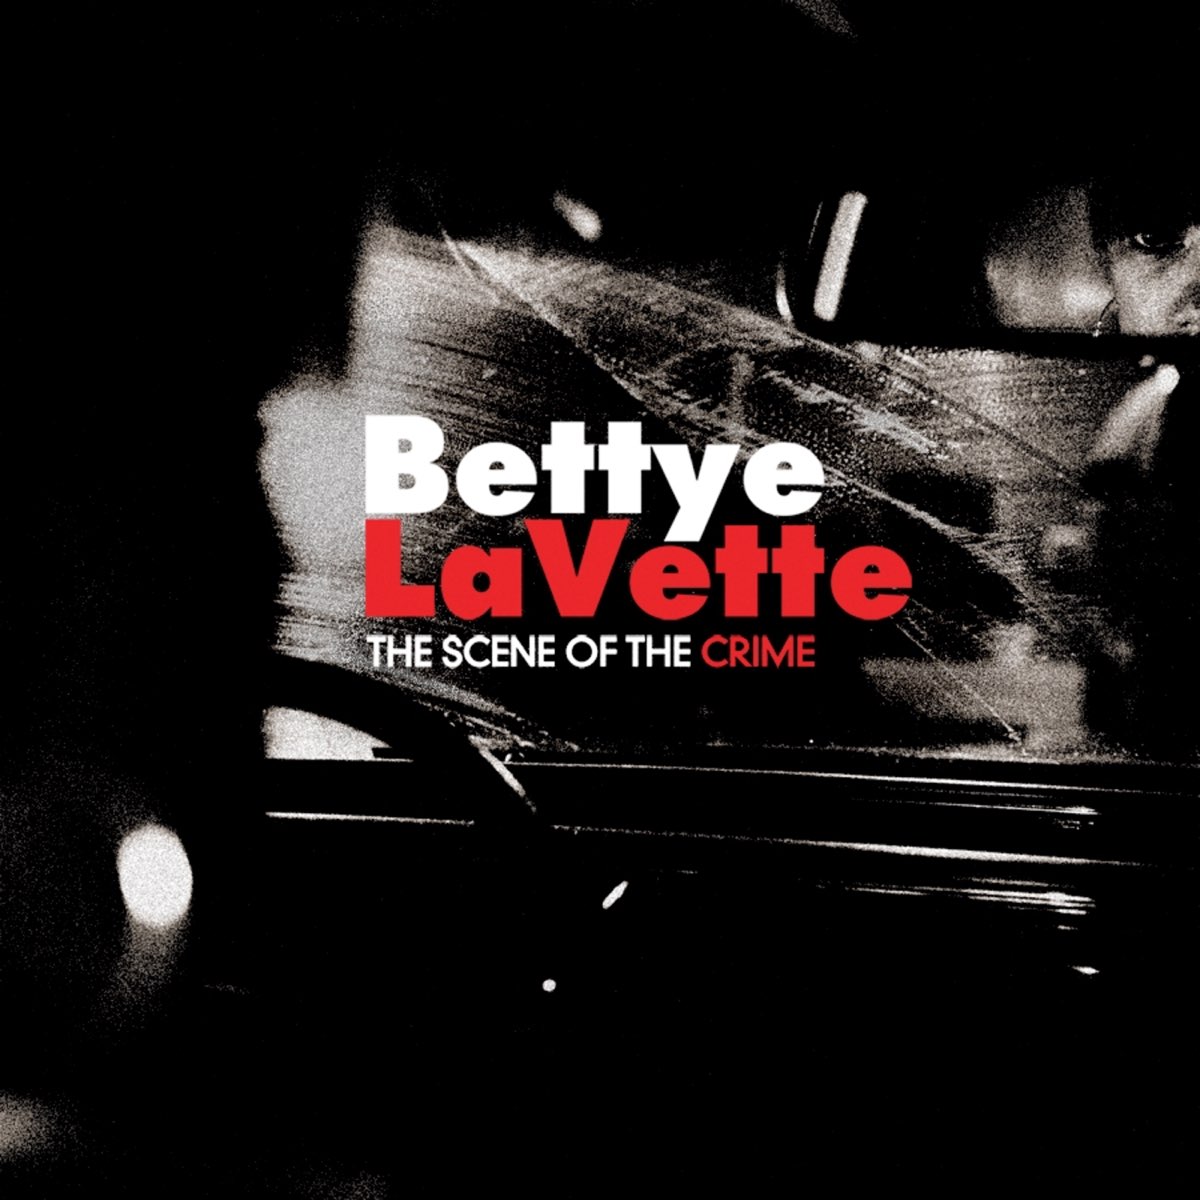 Bettye LaVette The Scene of the Crime cover artwork